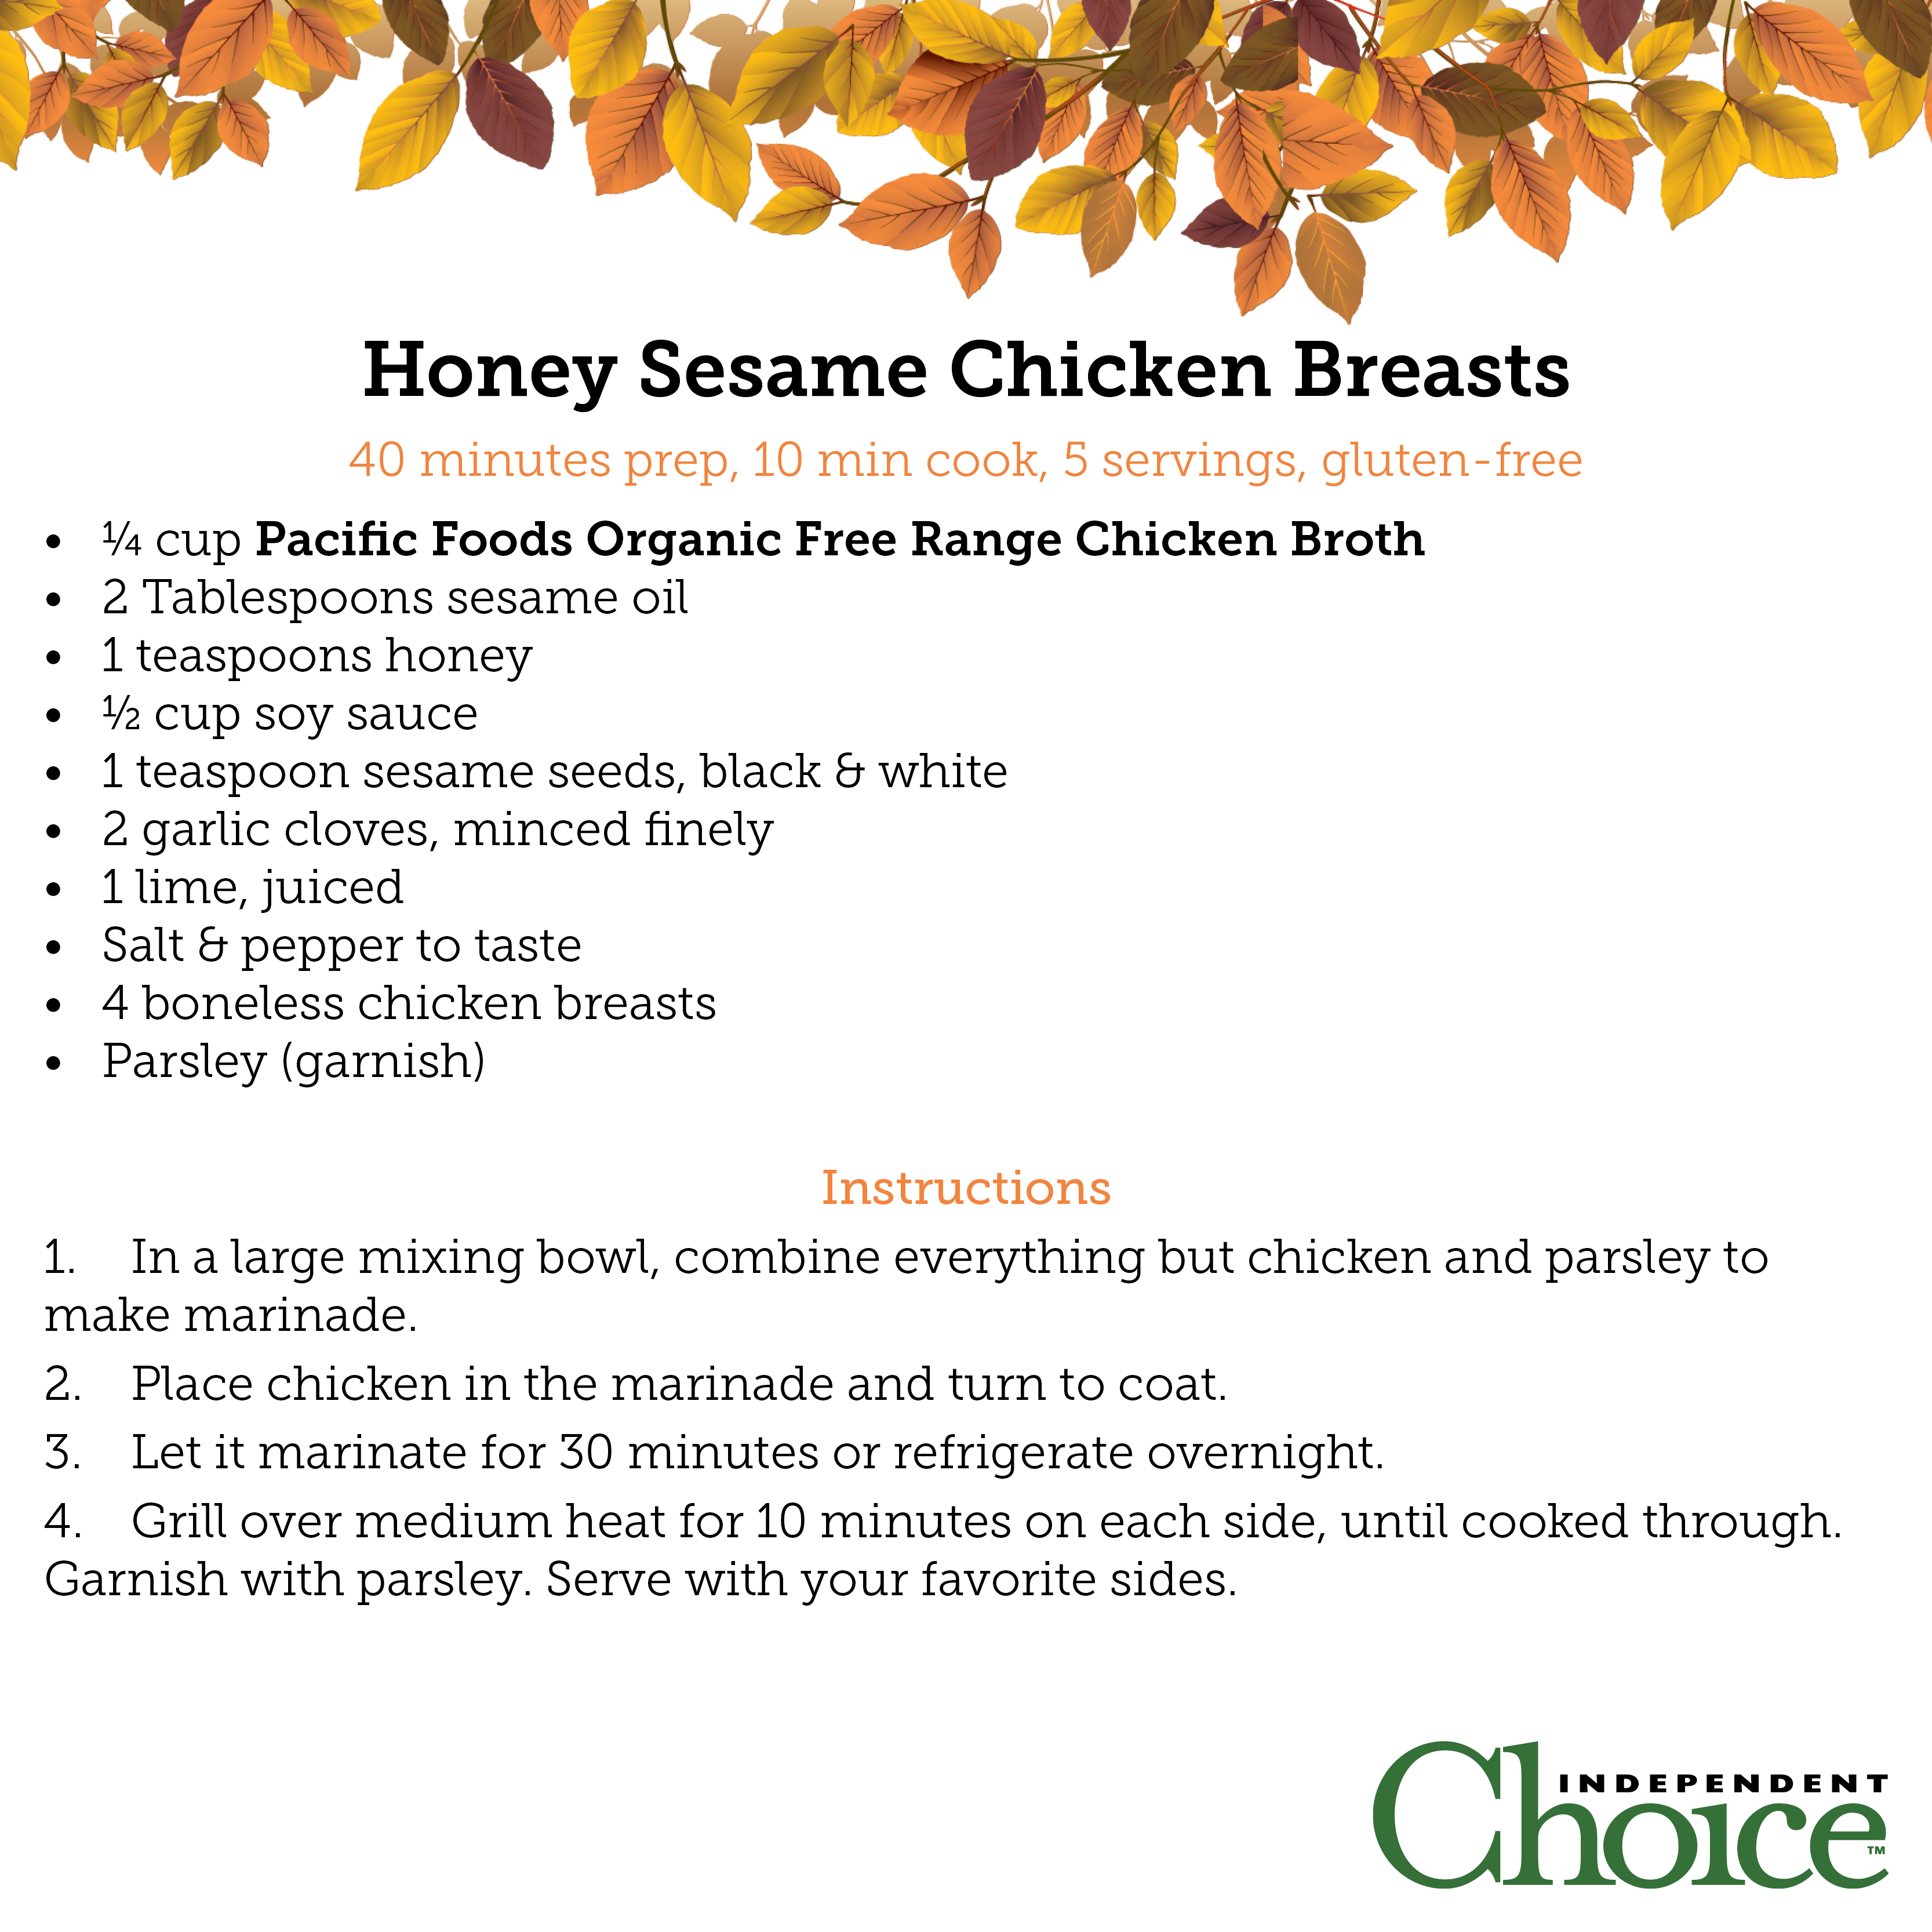 Honey Sesame Chicken Breasts